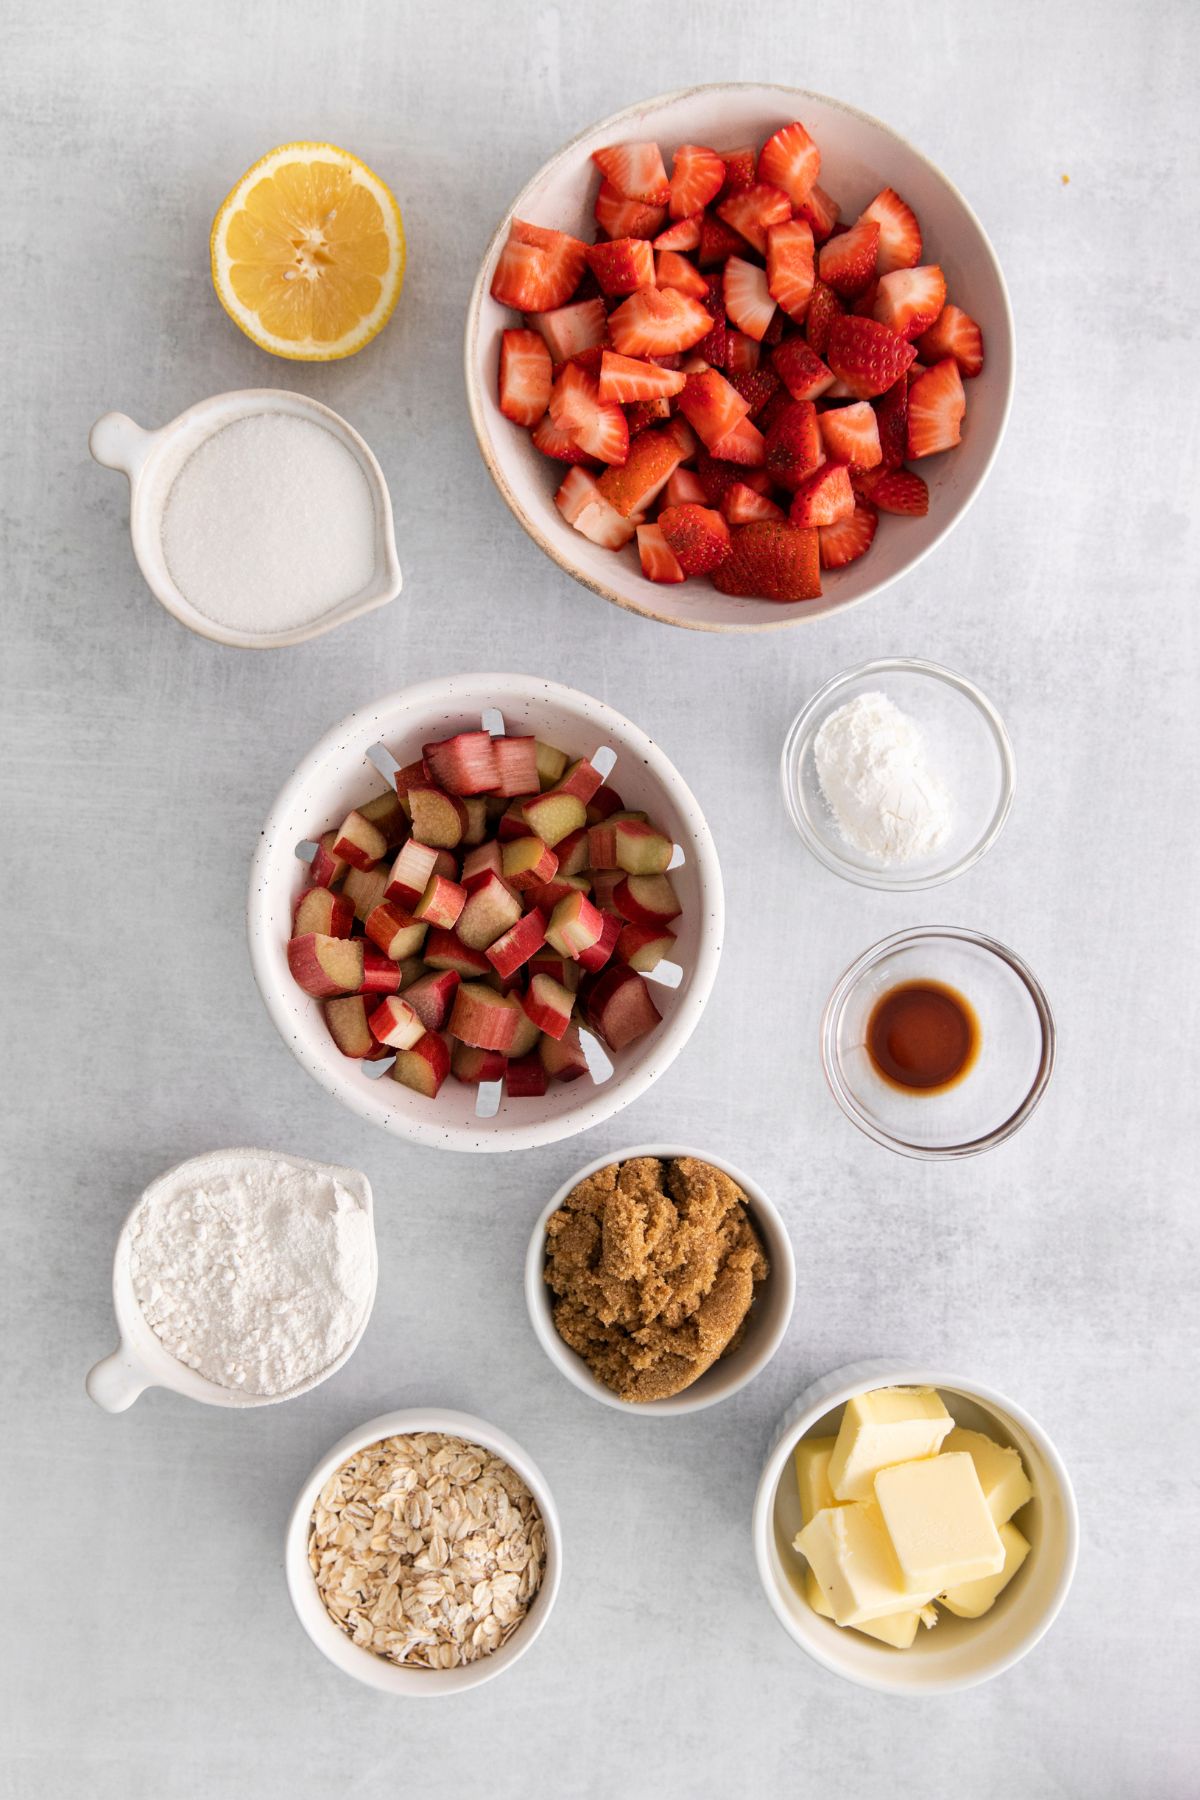 ingredients in bowls on white counter: half lemon, cut strawberries, cut rhubarb, sugar, flour, cornstarch, vanilla, butter, oats